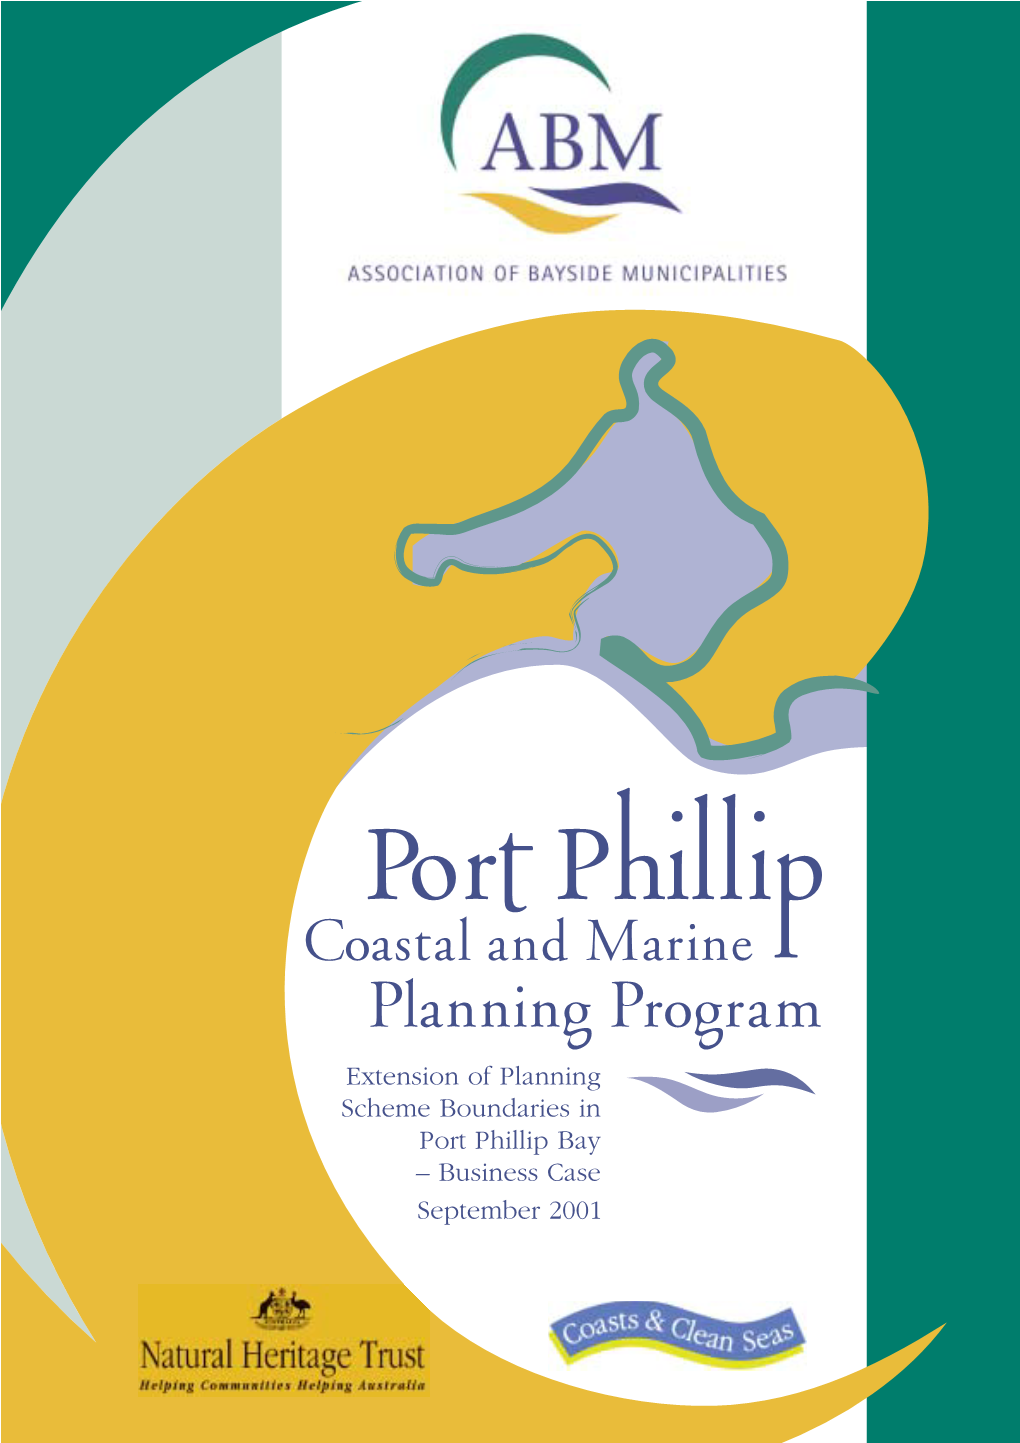 Planning Program Extension of Planning Scheme Boundaries in Port Phillip Bay – Business Case September 2001 Business Case